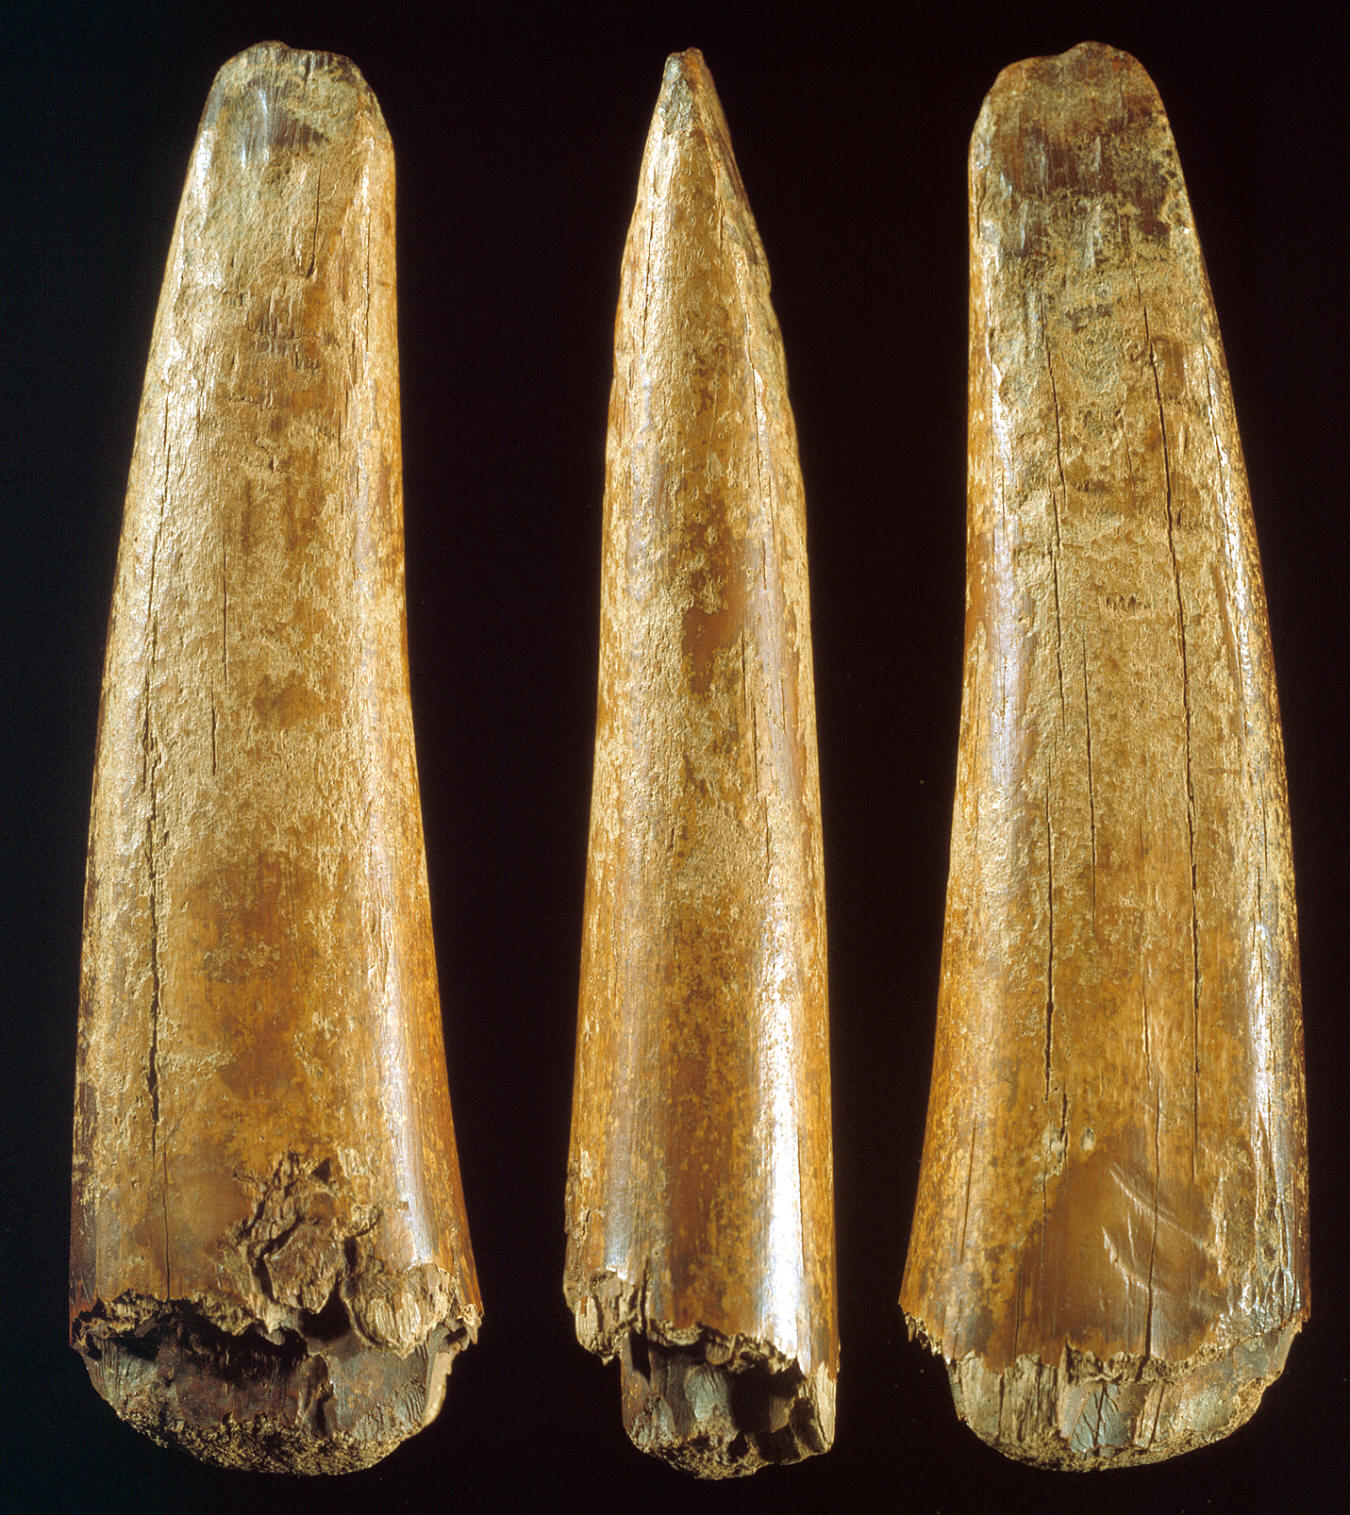 Ivory harpoon tip imbedded in a whale flipper bone.